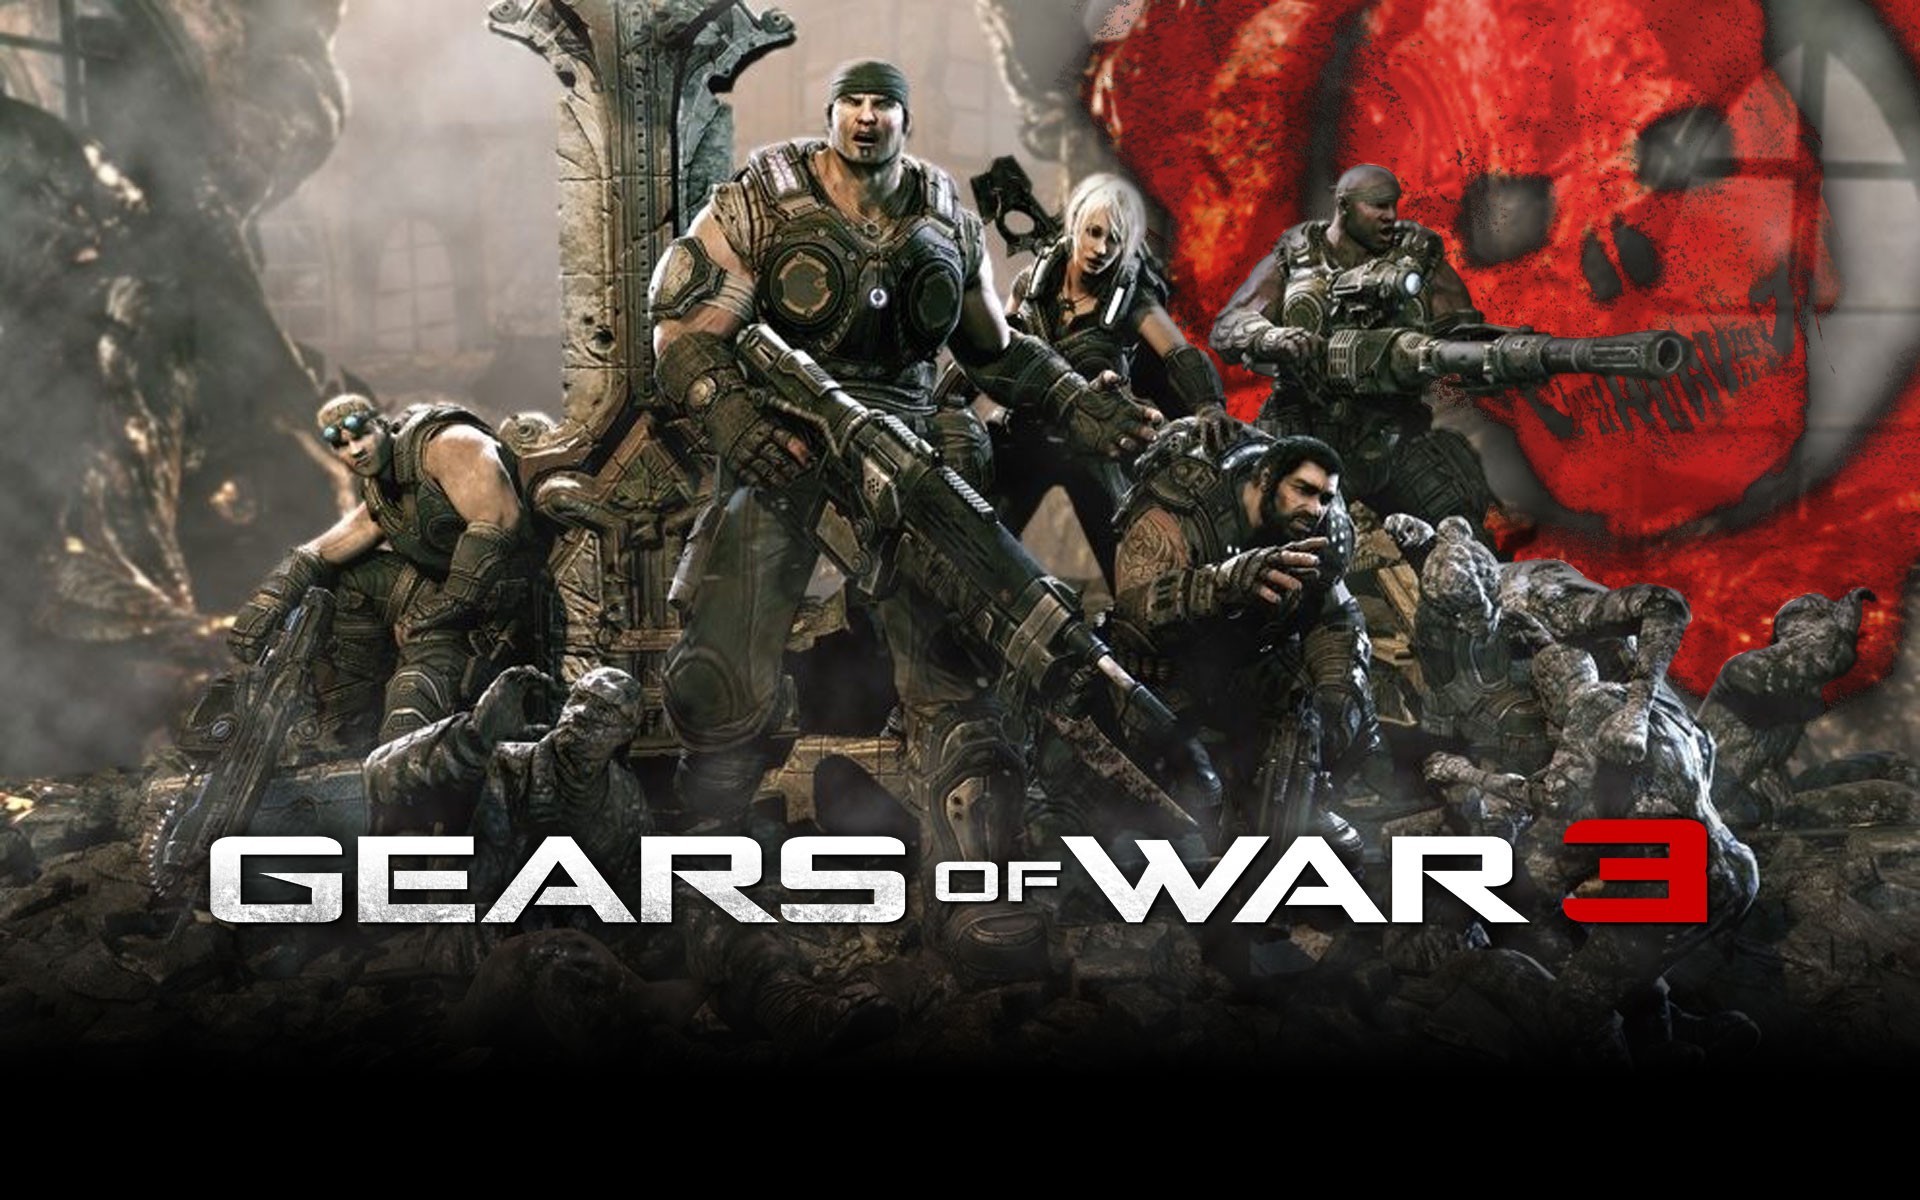 1-) Gears Of War 3